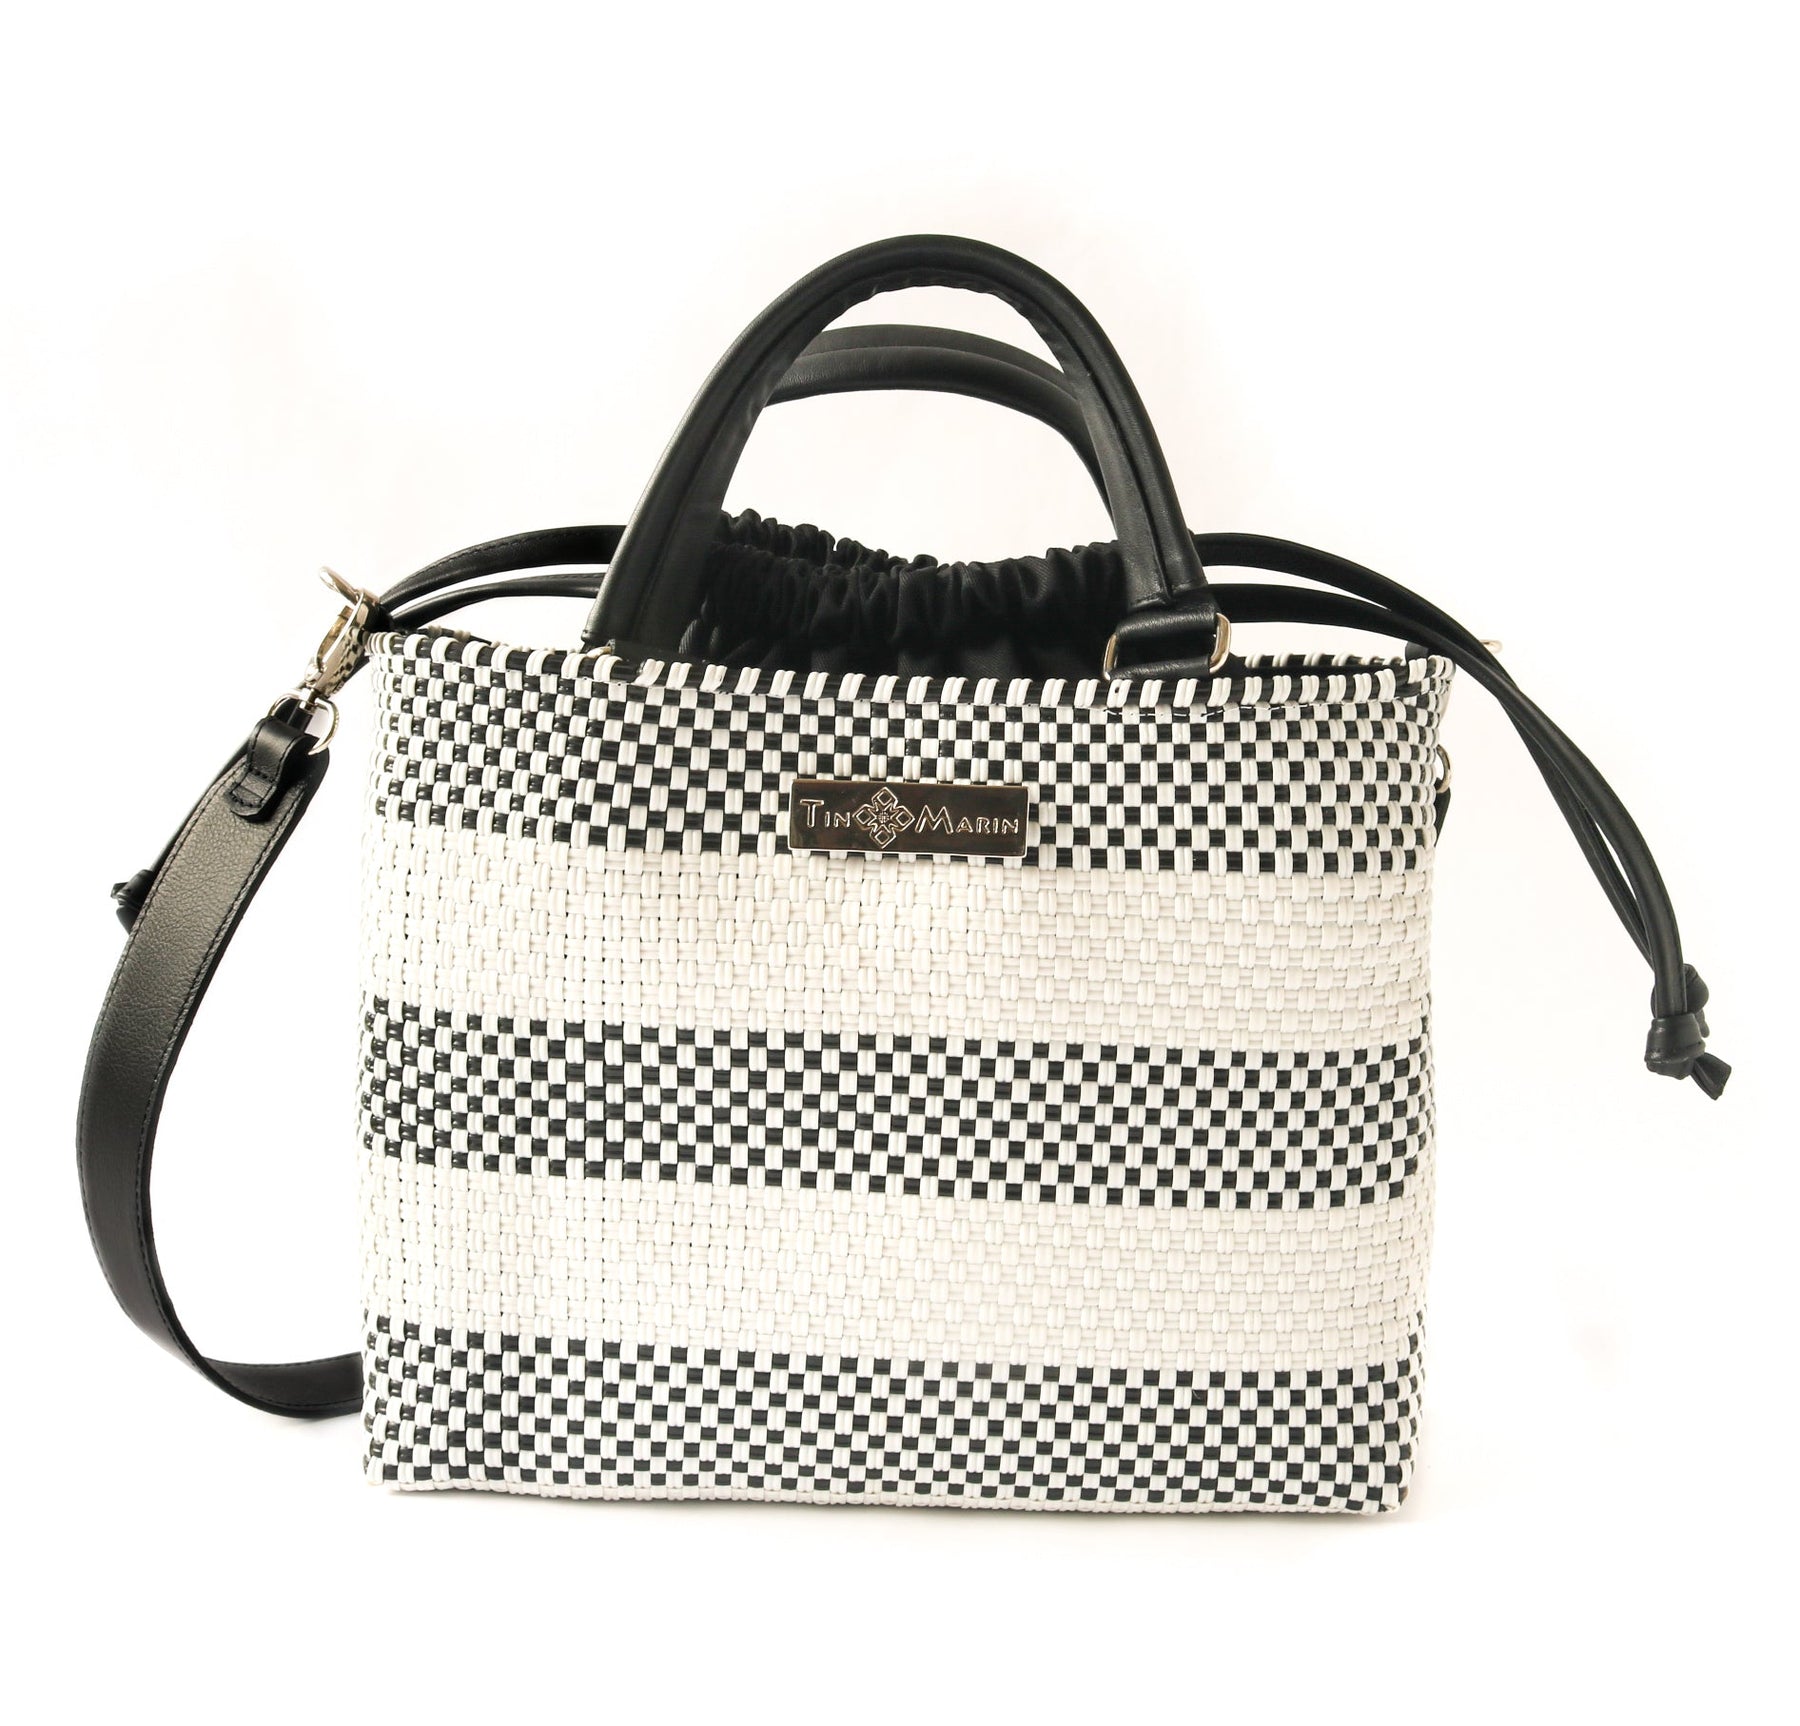 Tin Marin - Lolo Medium Woven Crossbody with Drawstring Bag - Black & White *Final Sale*